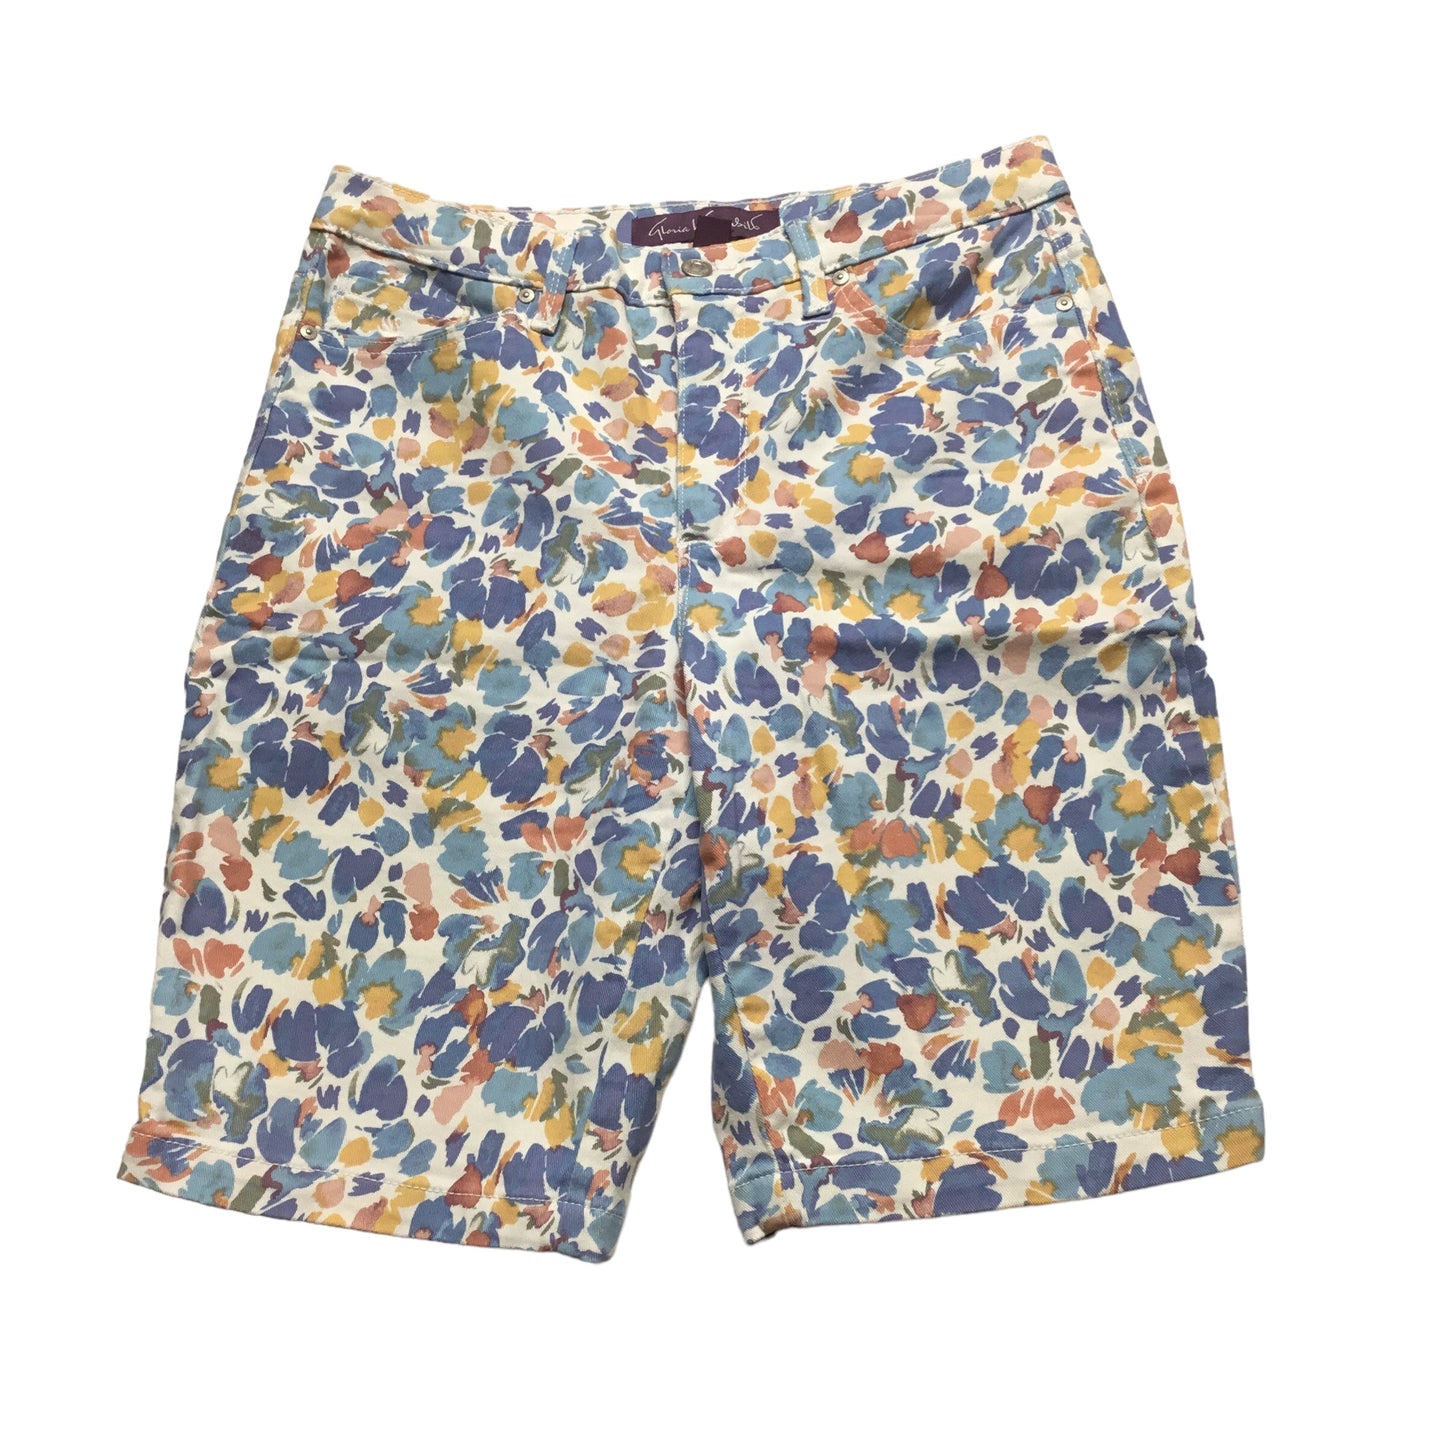 Multi-colored Shorts Gloria Vanderbilt, Size 10